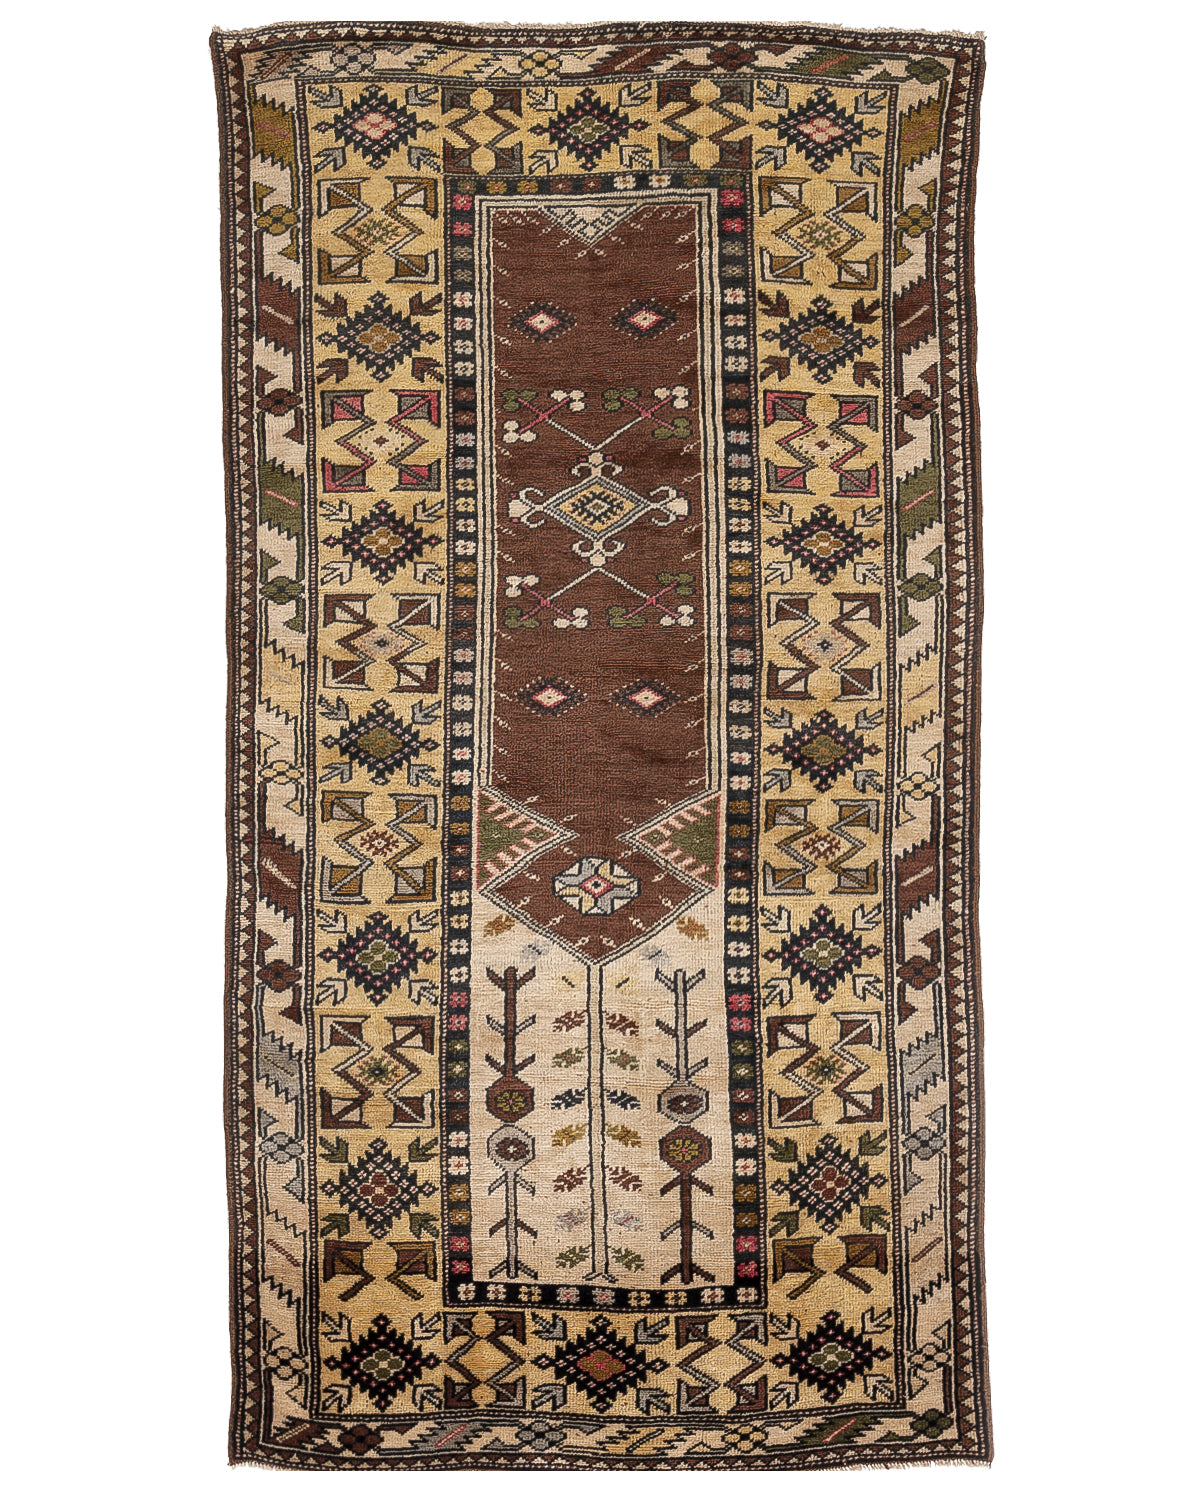 Oriental Rug Anatolian Handmade Wool On Wool 117 X 218 Cm - 3' 11'' X 7' 2'' Brown C005 ER01